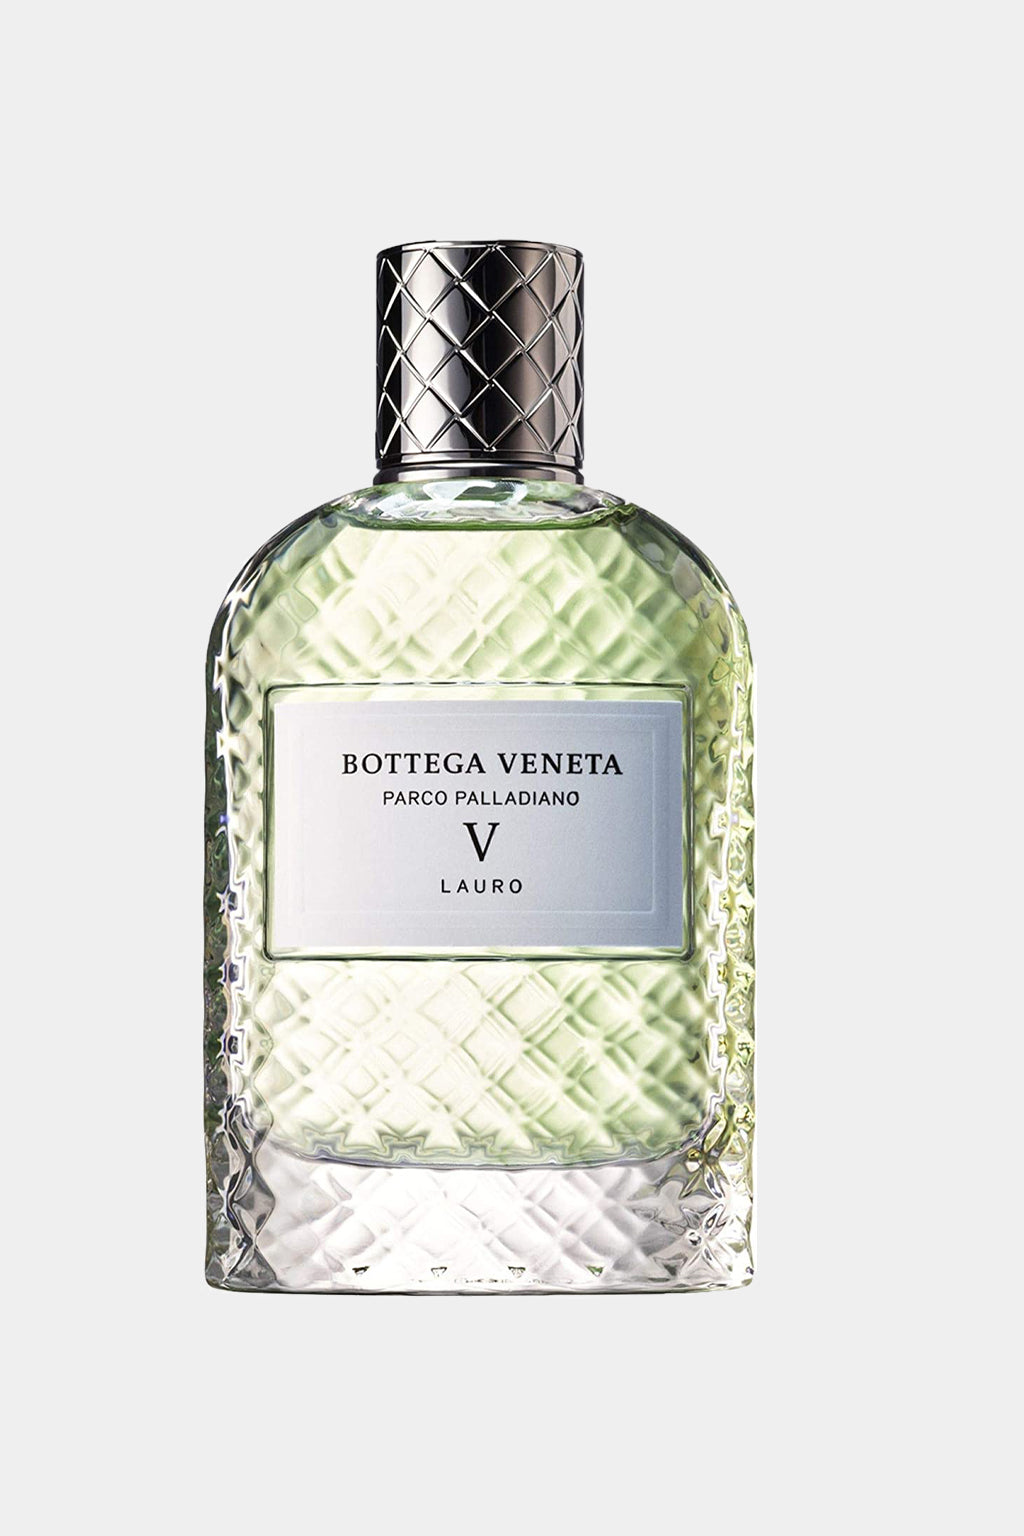 Bottega Veneta -  V Lauro Private Eau de Parfum